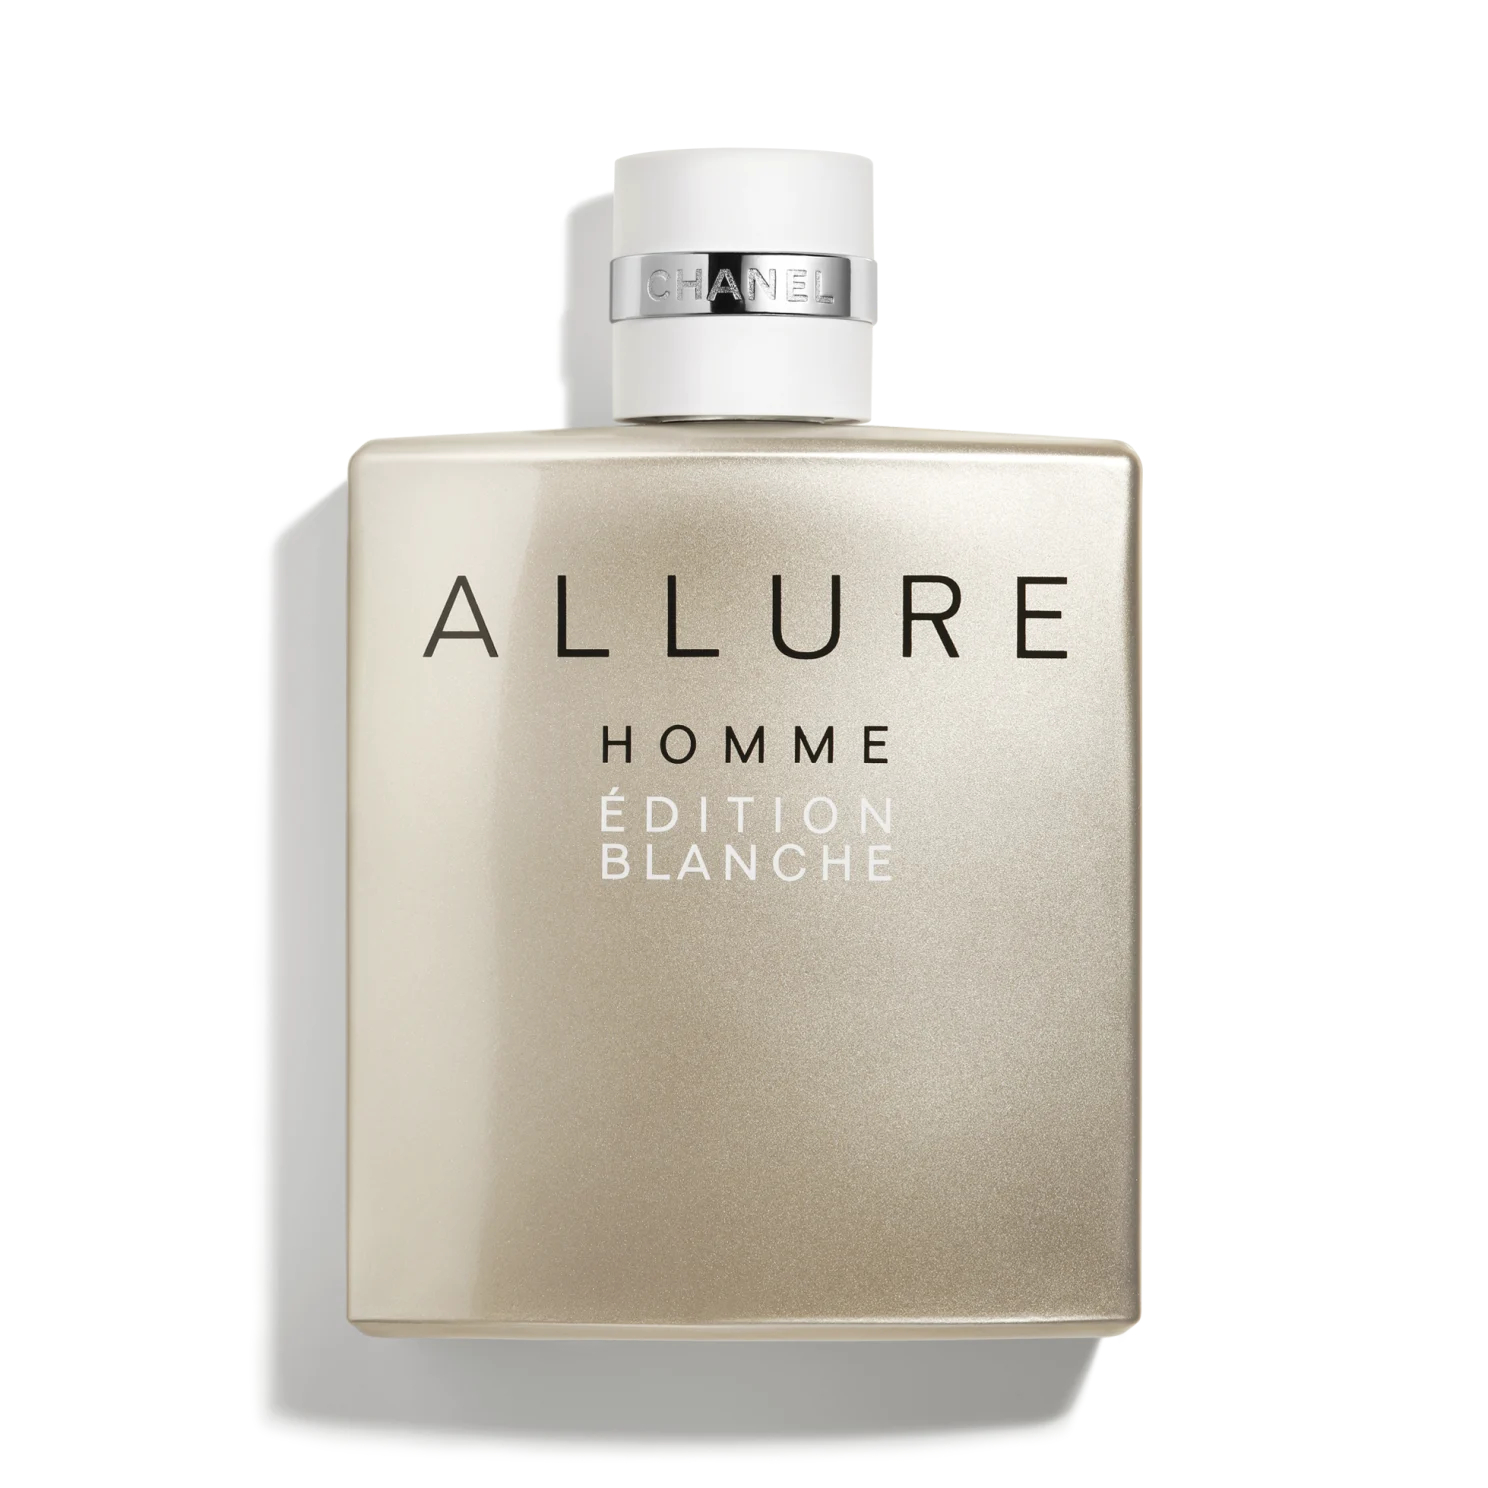 Вода парфюмерная Chanel Allure Homme Edition Blanche мужская, 150 мл 1881 edition blanche